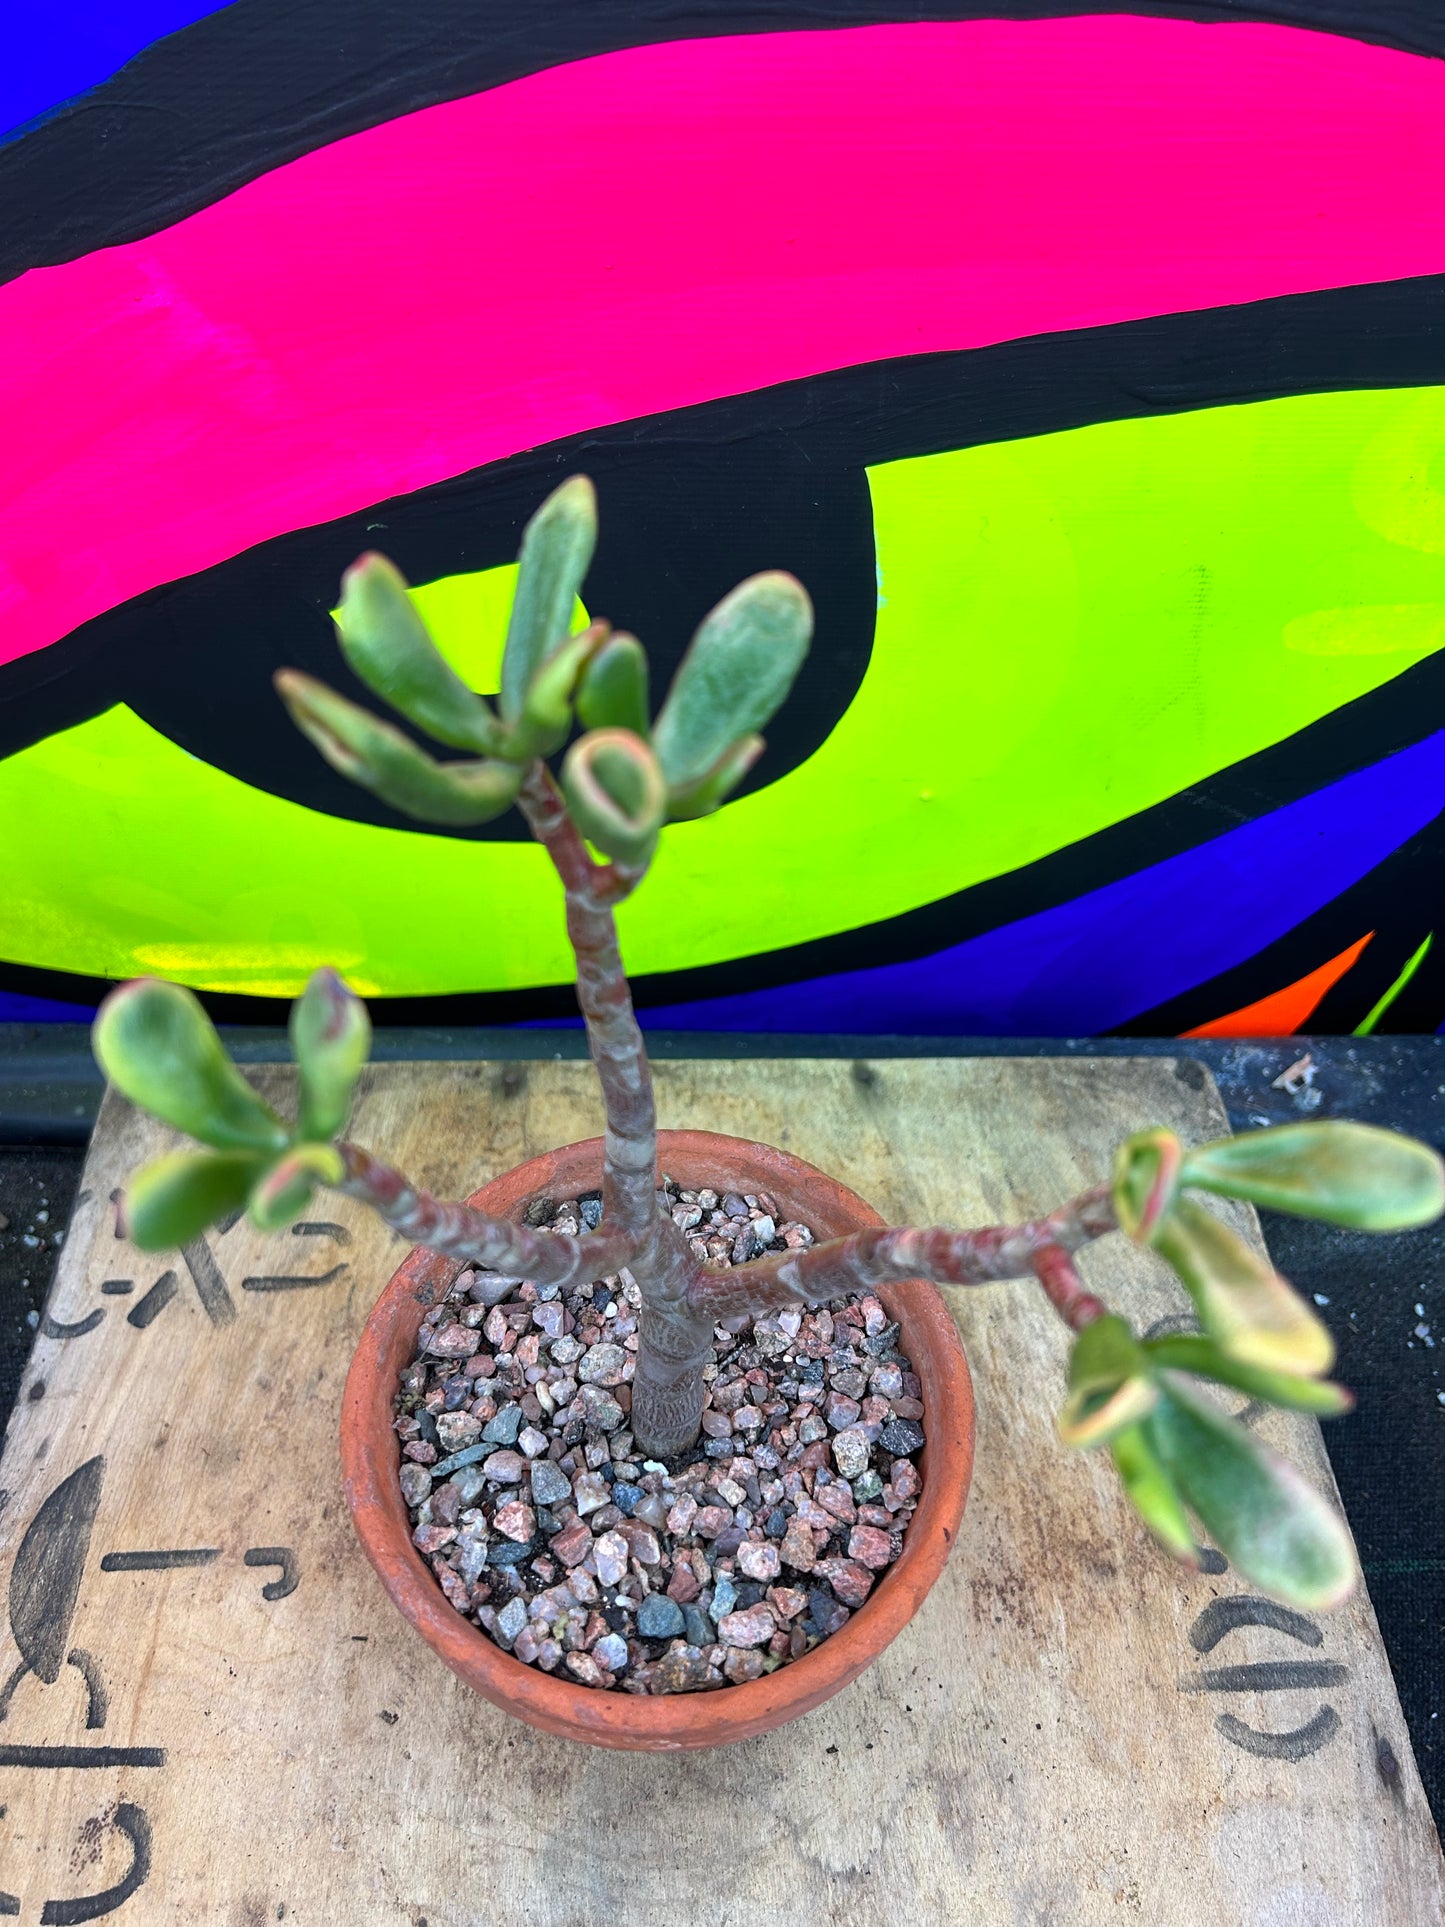 Crassula ovata 'gollum' variegata (509)